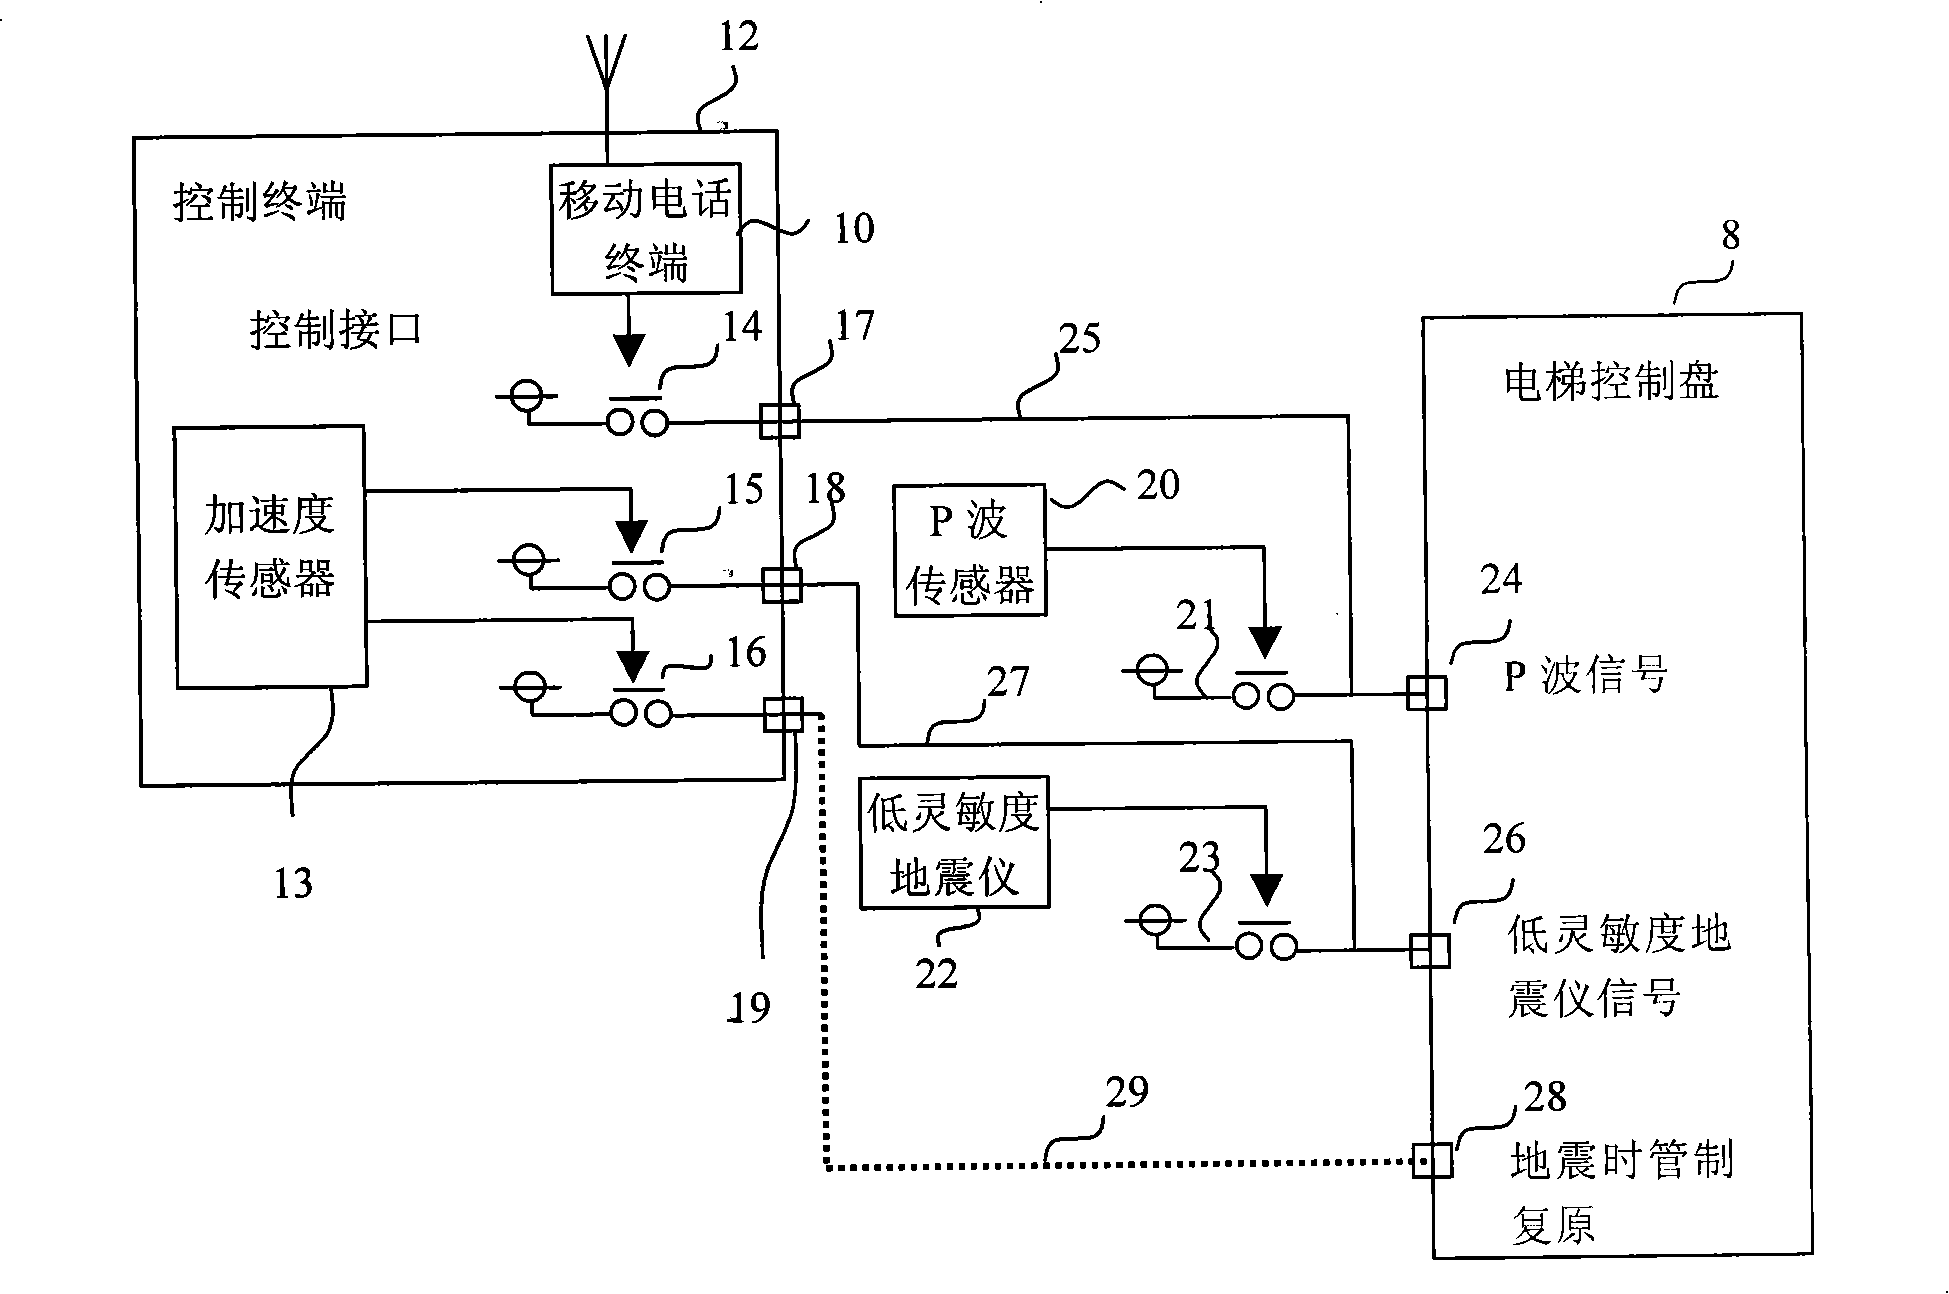 Control apparatus and refit method of elevator